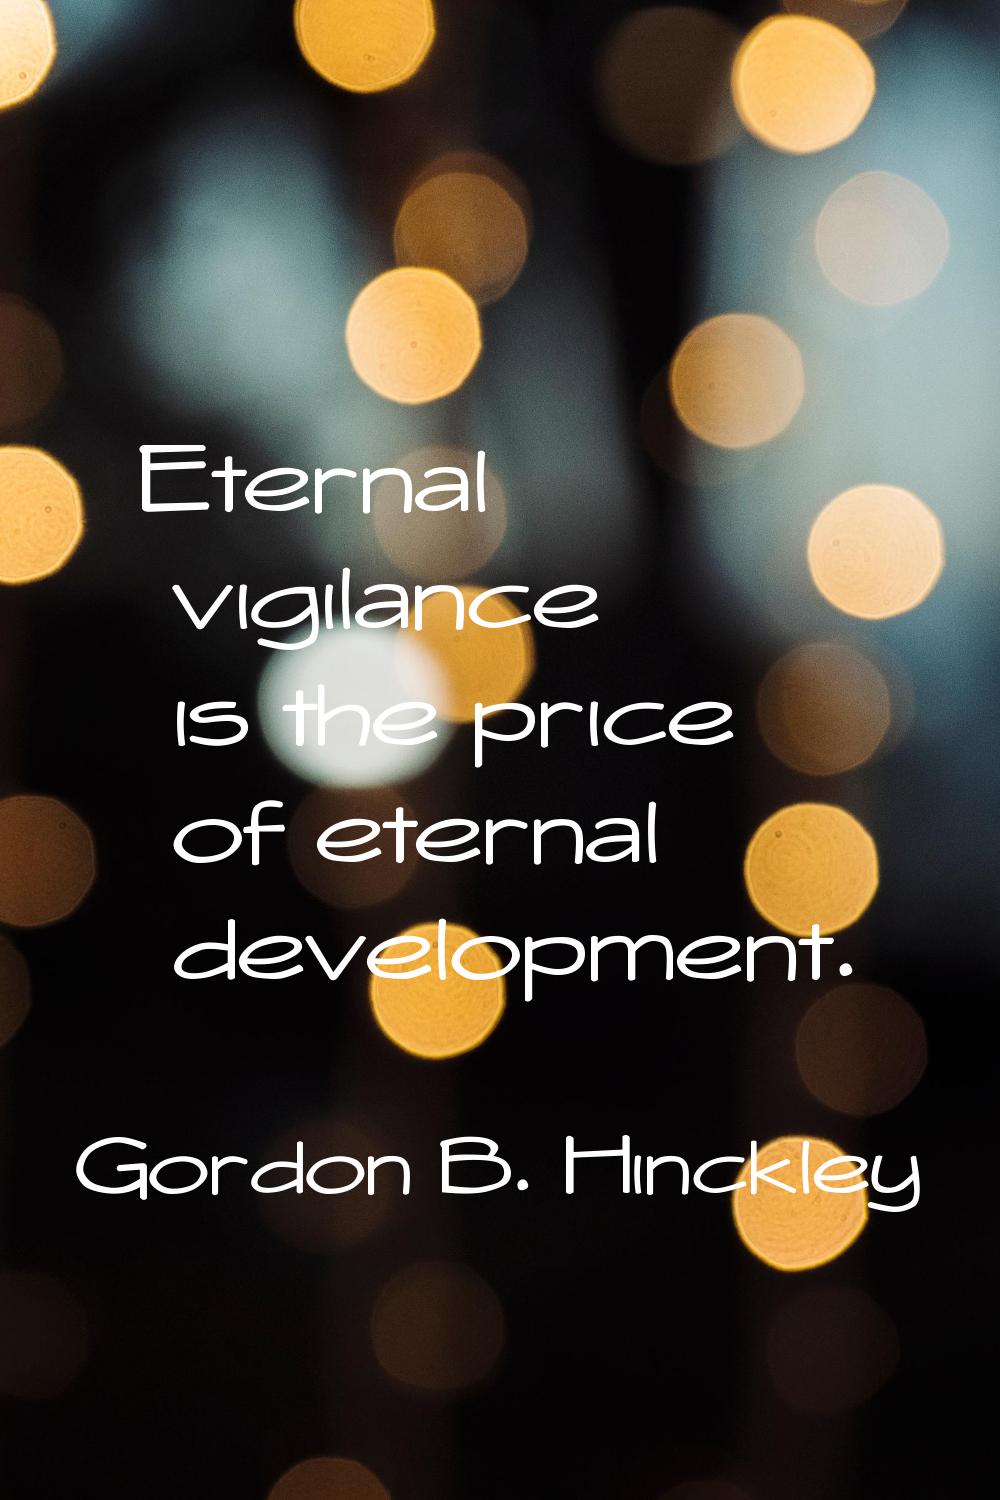 Eternal vigilance is the price of eternal development.